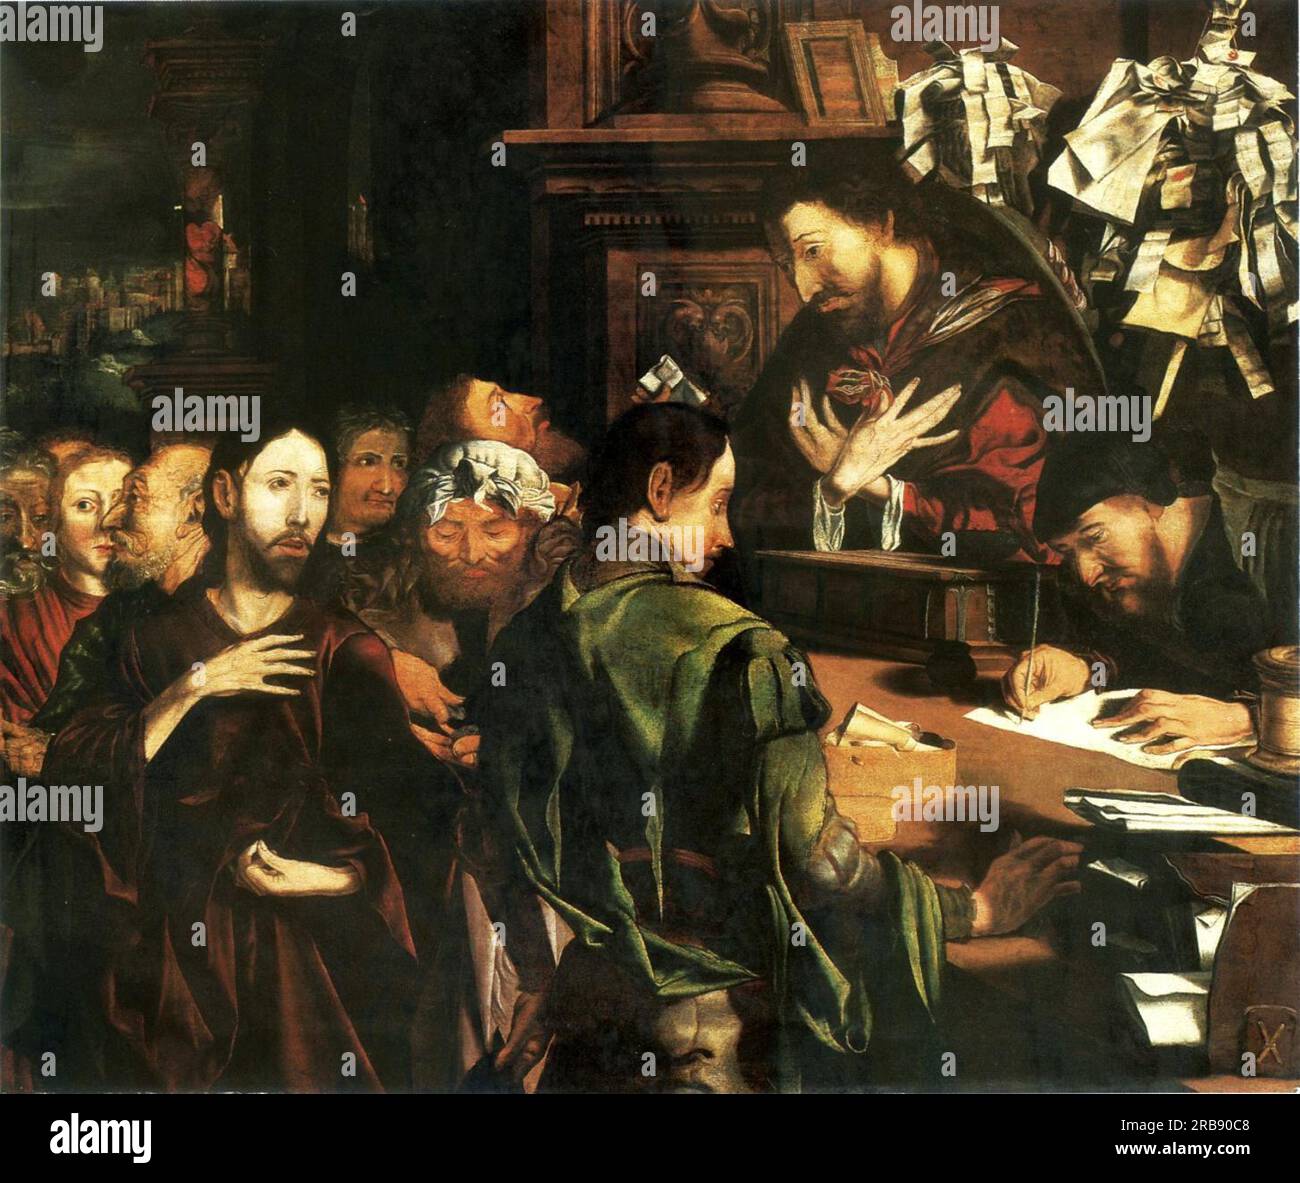 The Calling of St. Matthew 1540 by Marinus van Reymerswaele Stock Photo